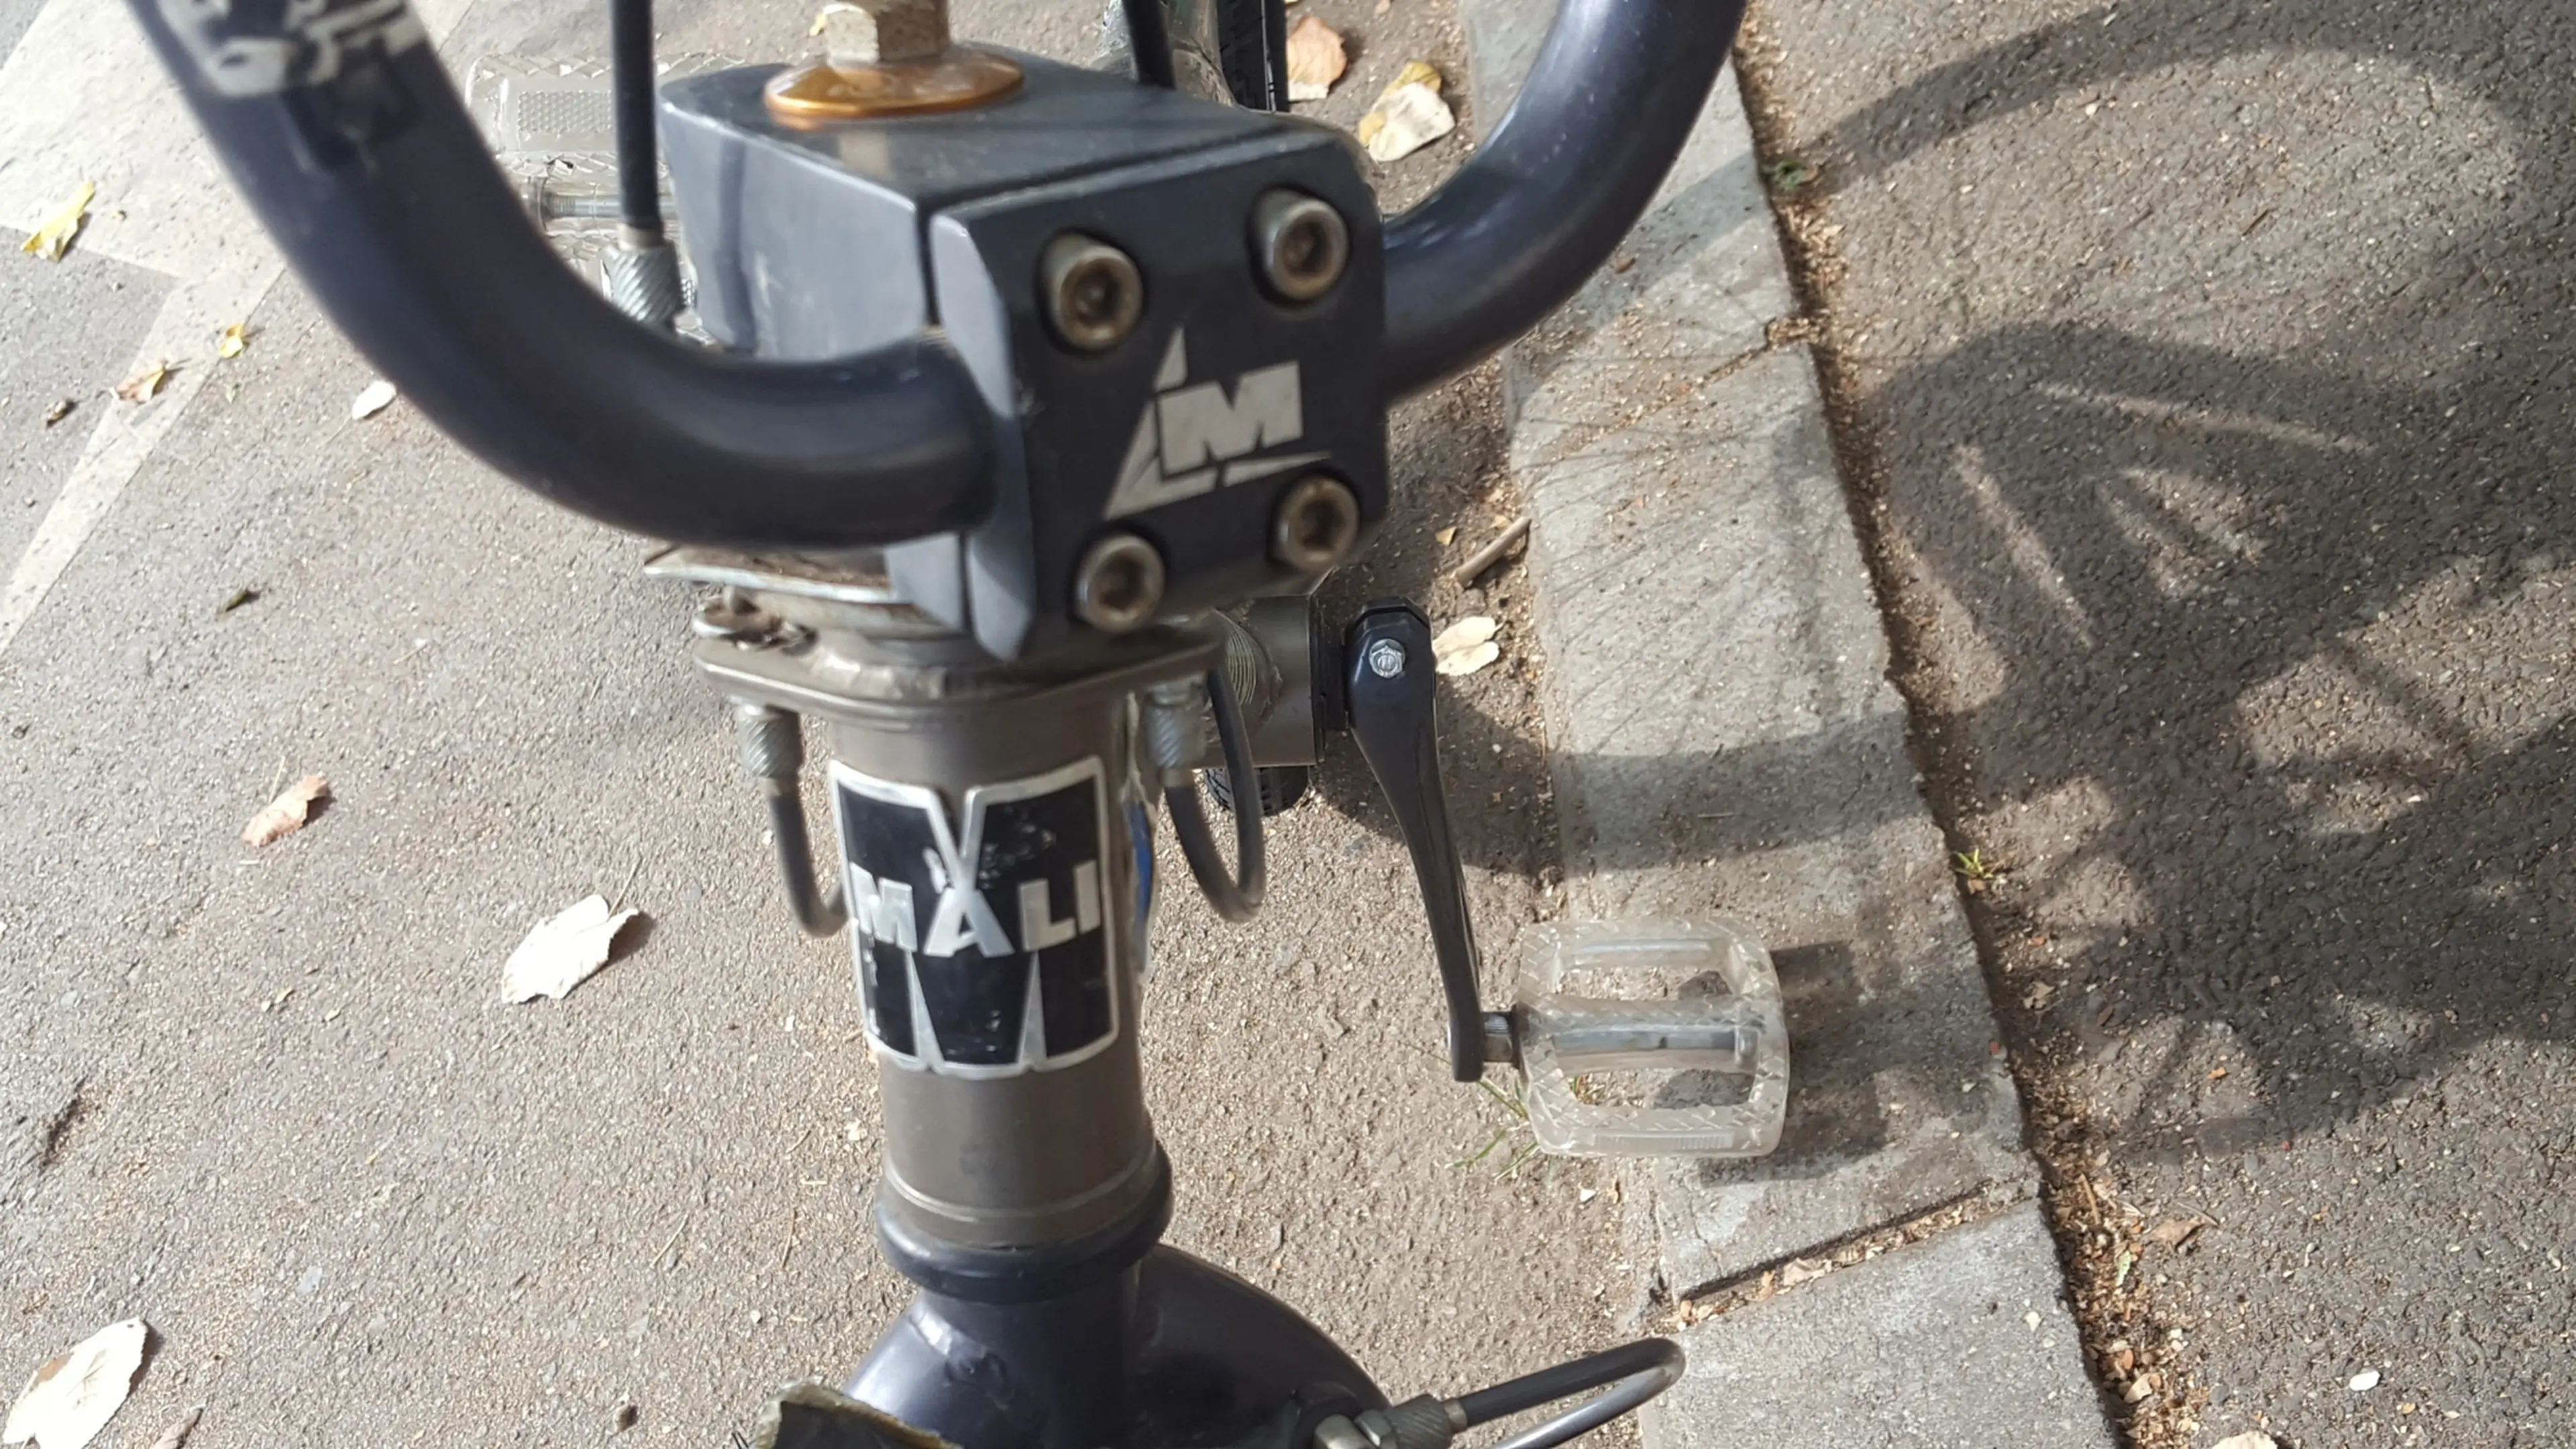 3. Bicicleta Bmx Mali